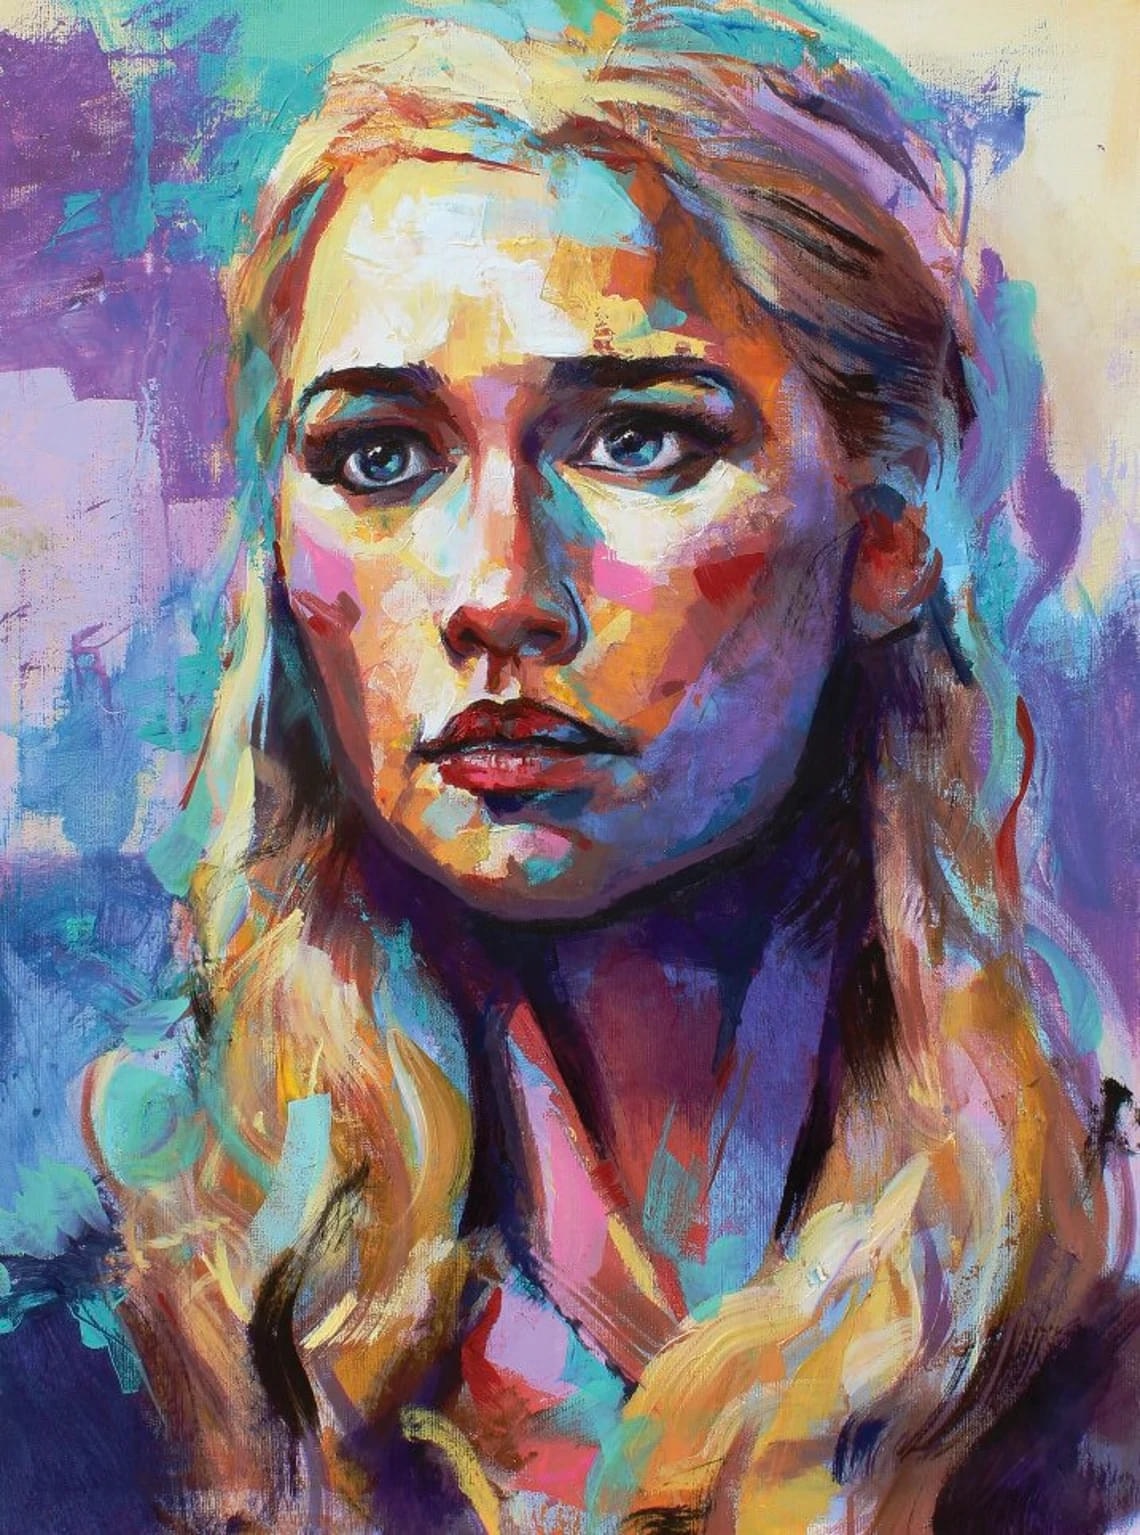 "Daenerys Targaryen" - Game of Thrones Portraits Artwork